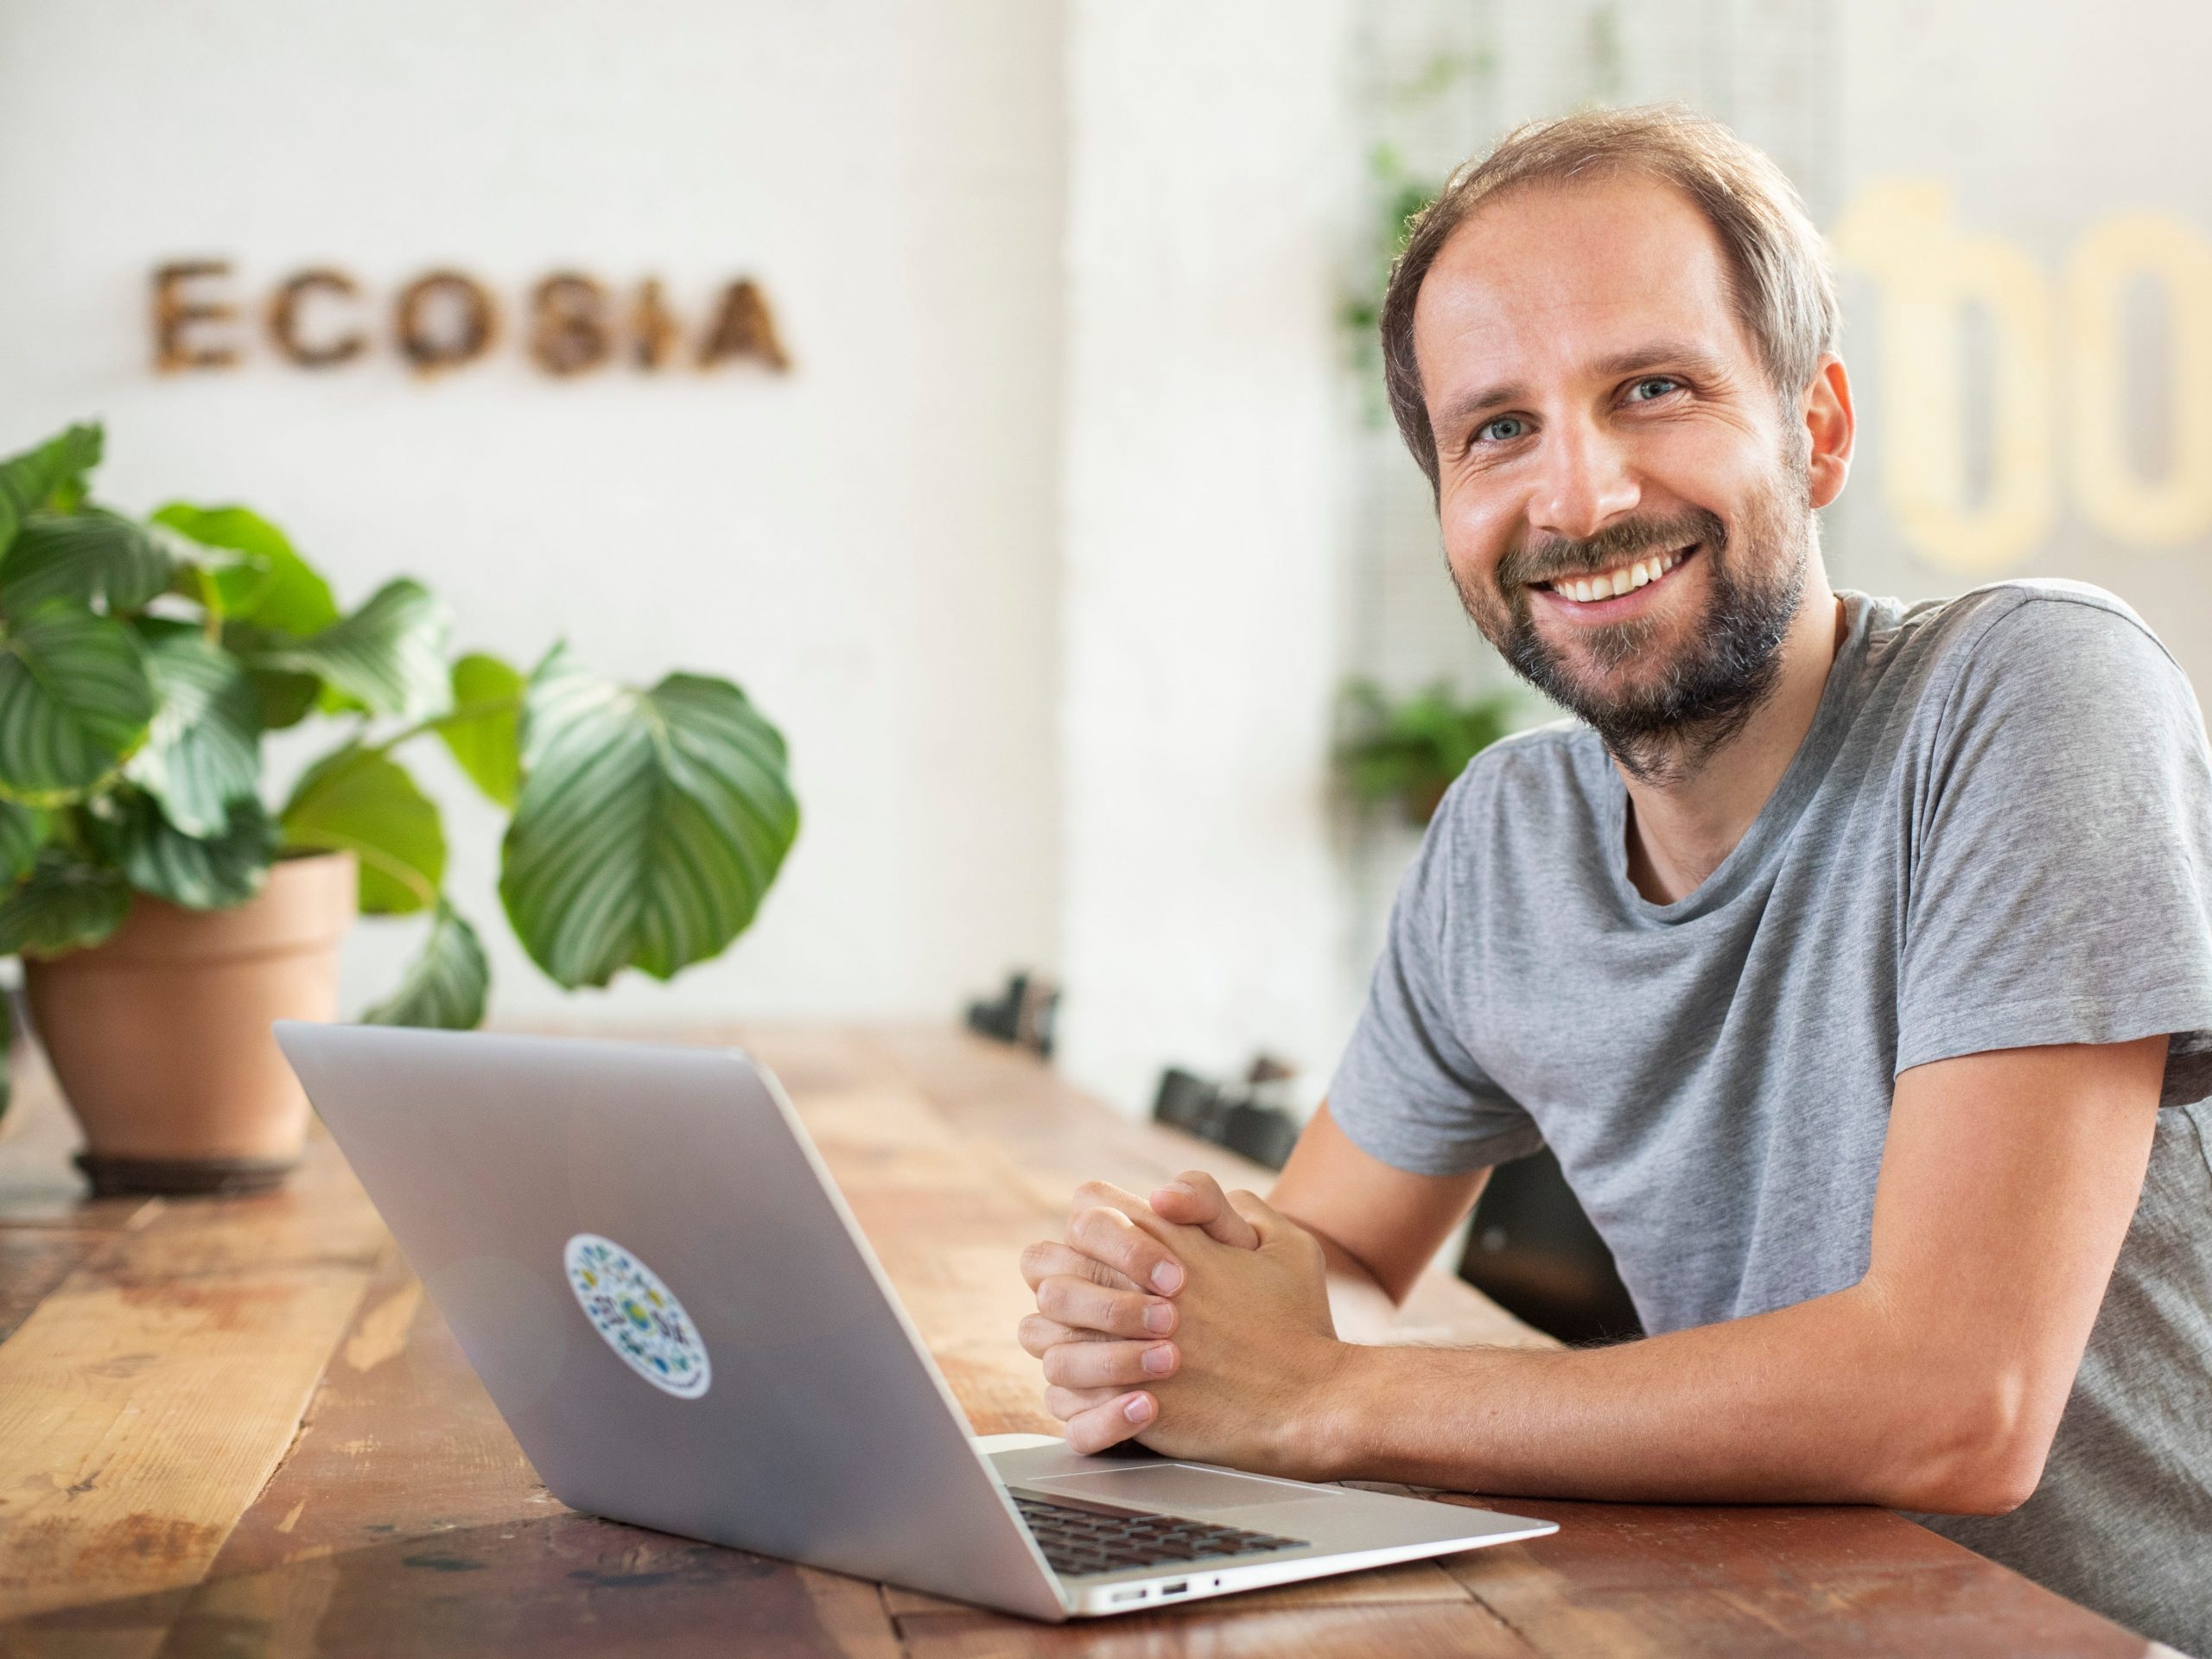 Ecosia CEO Christian Kroll